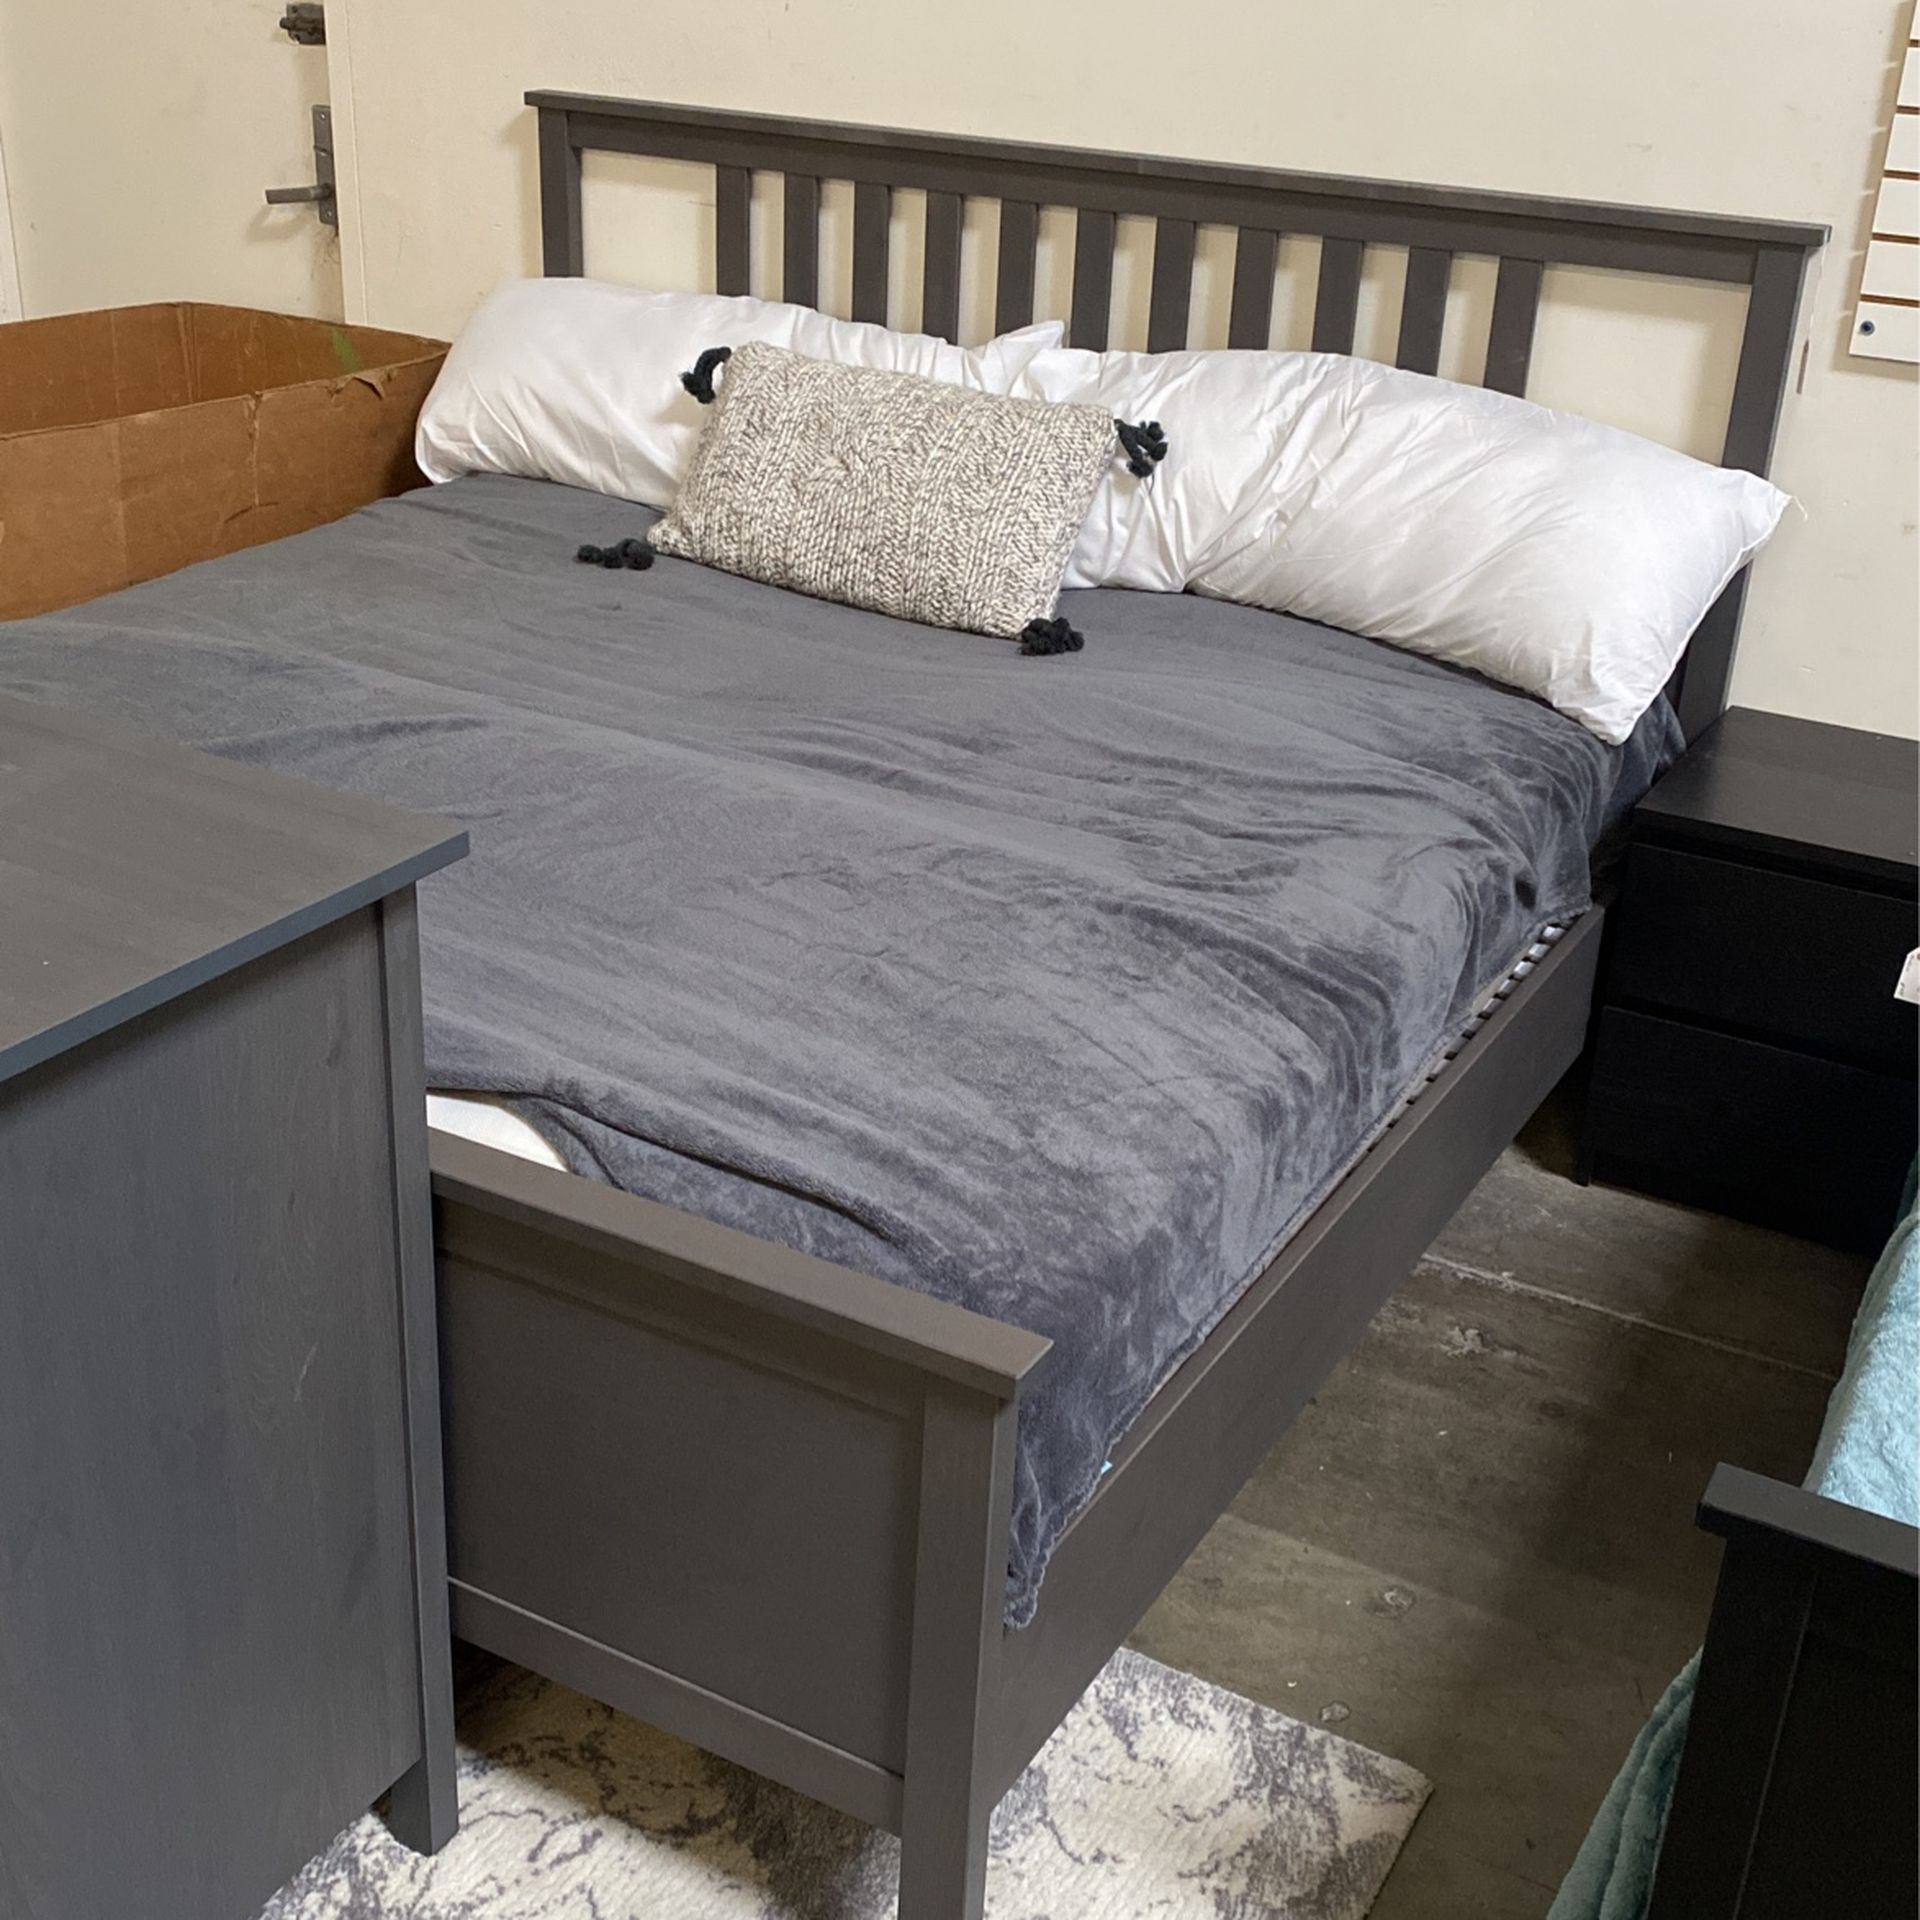 IKEa Hemnes Grey Paint – Design Consignment